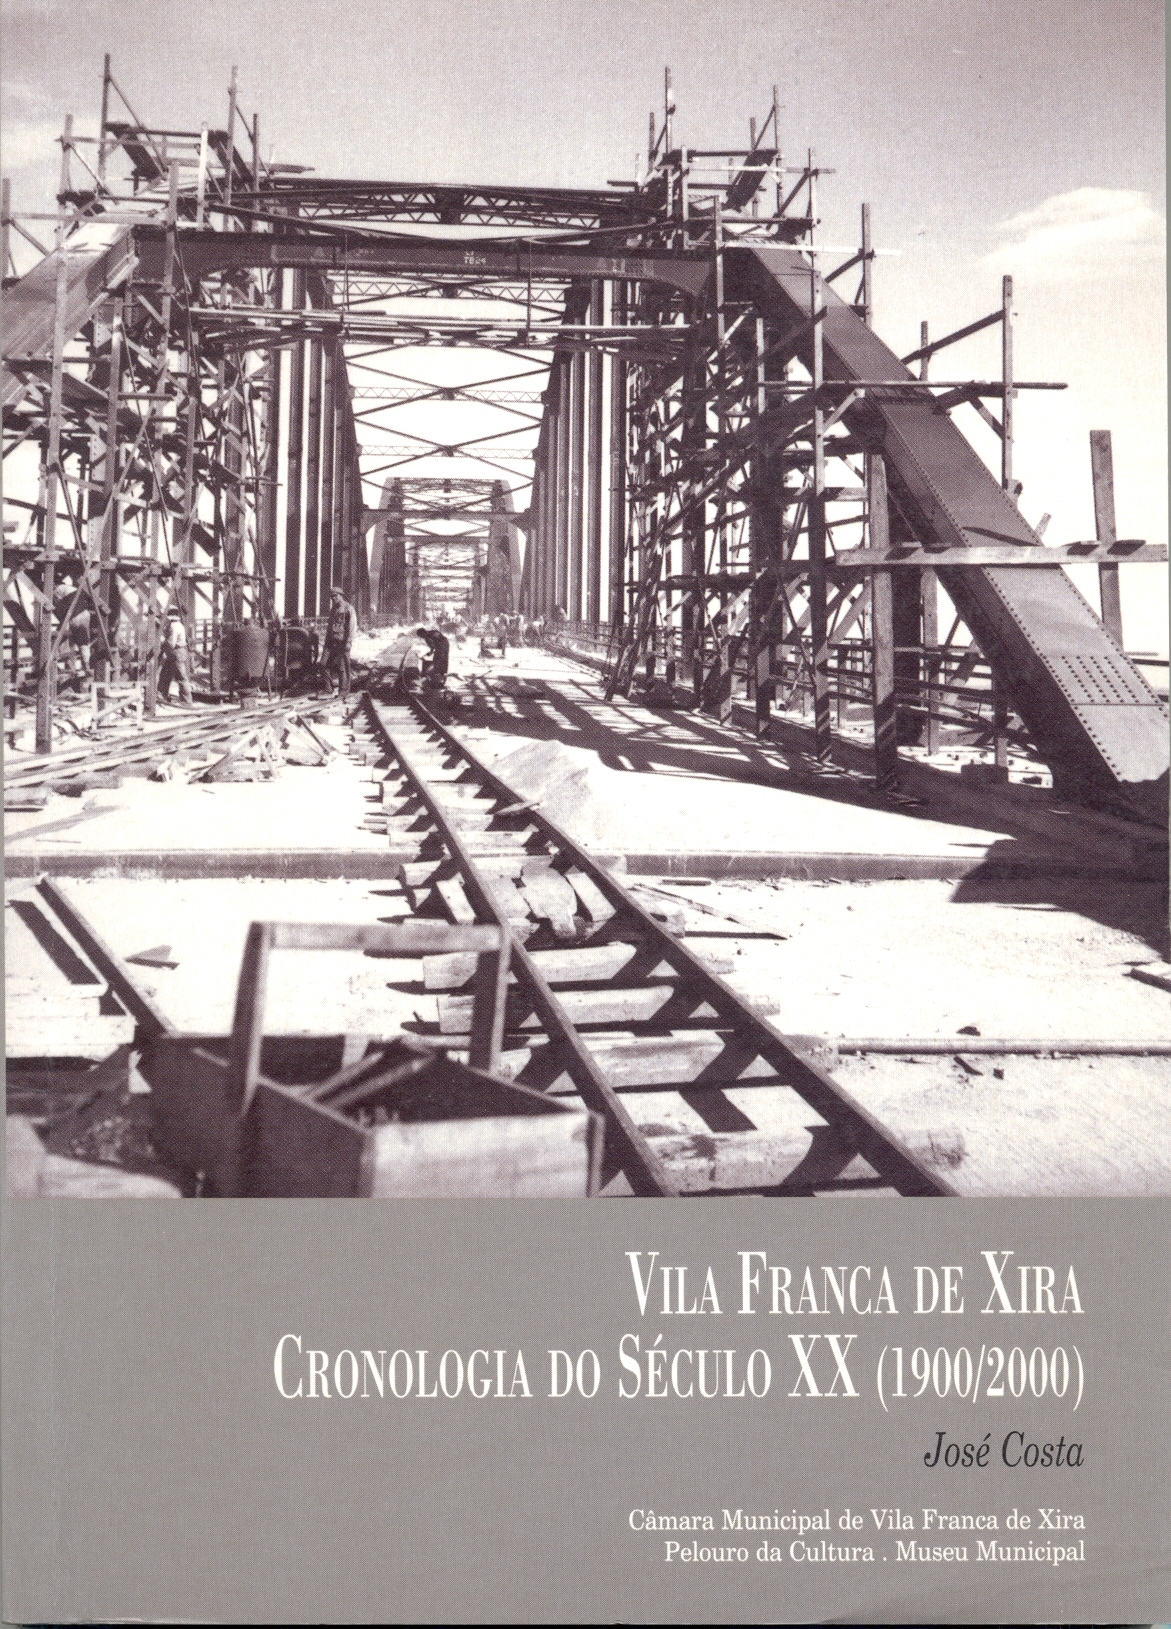 José Costa – Vila Franca de Xira, Cronologia do Século XX (1900/2000)